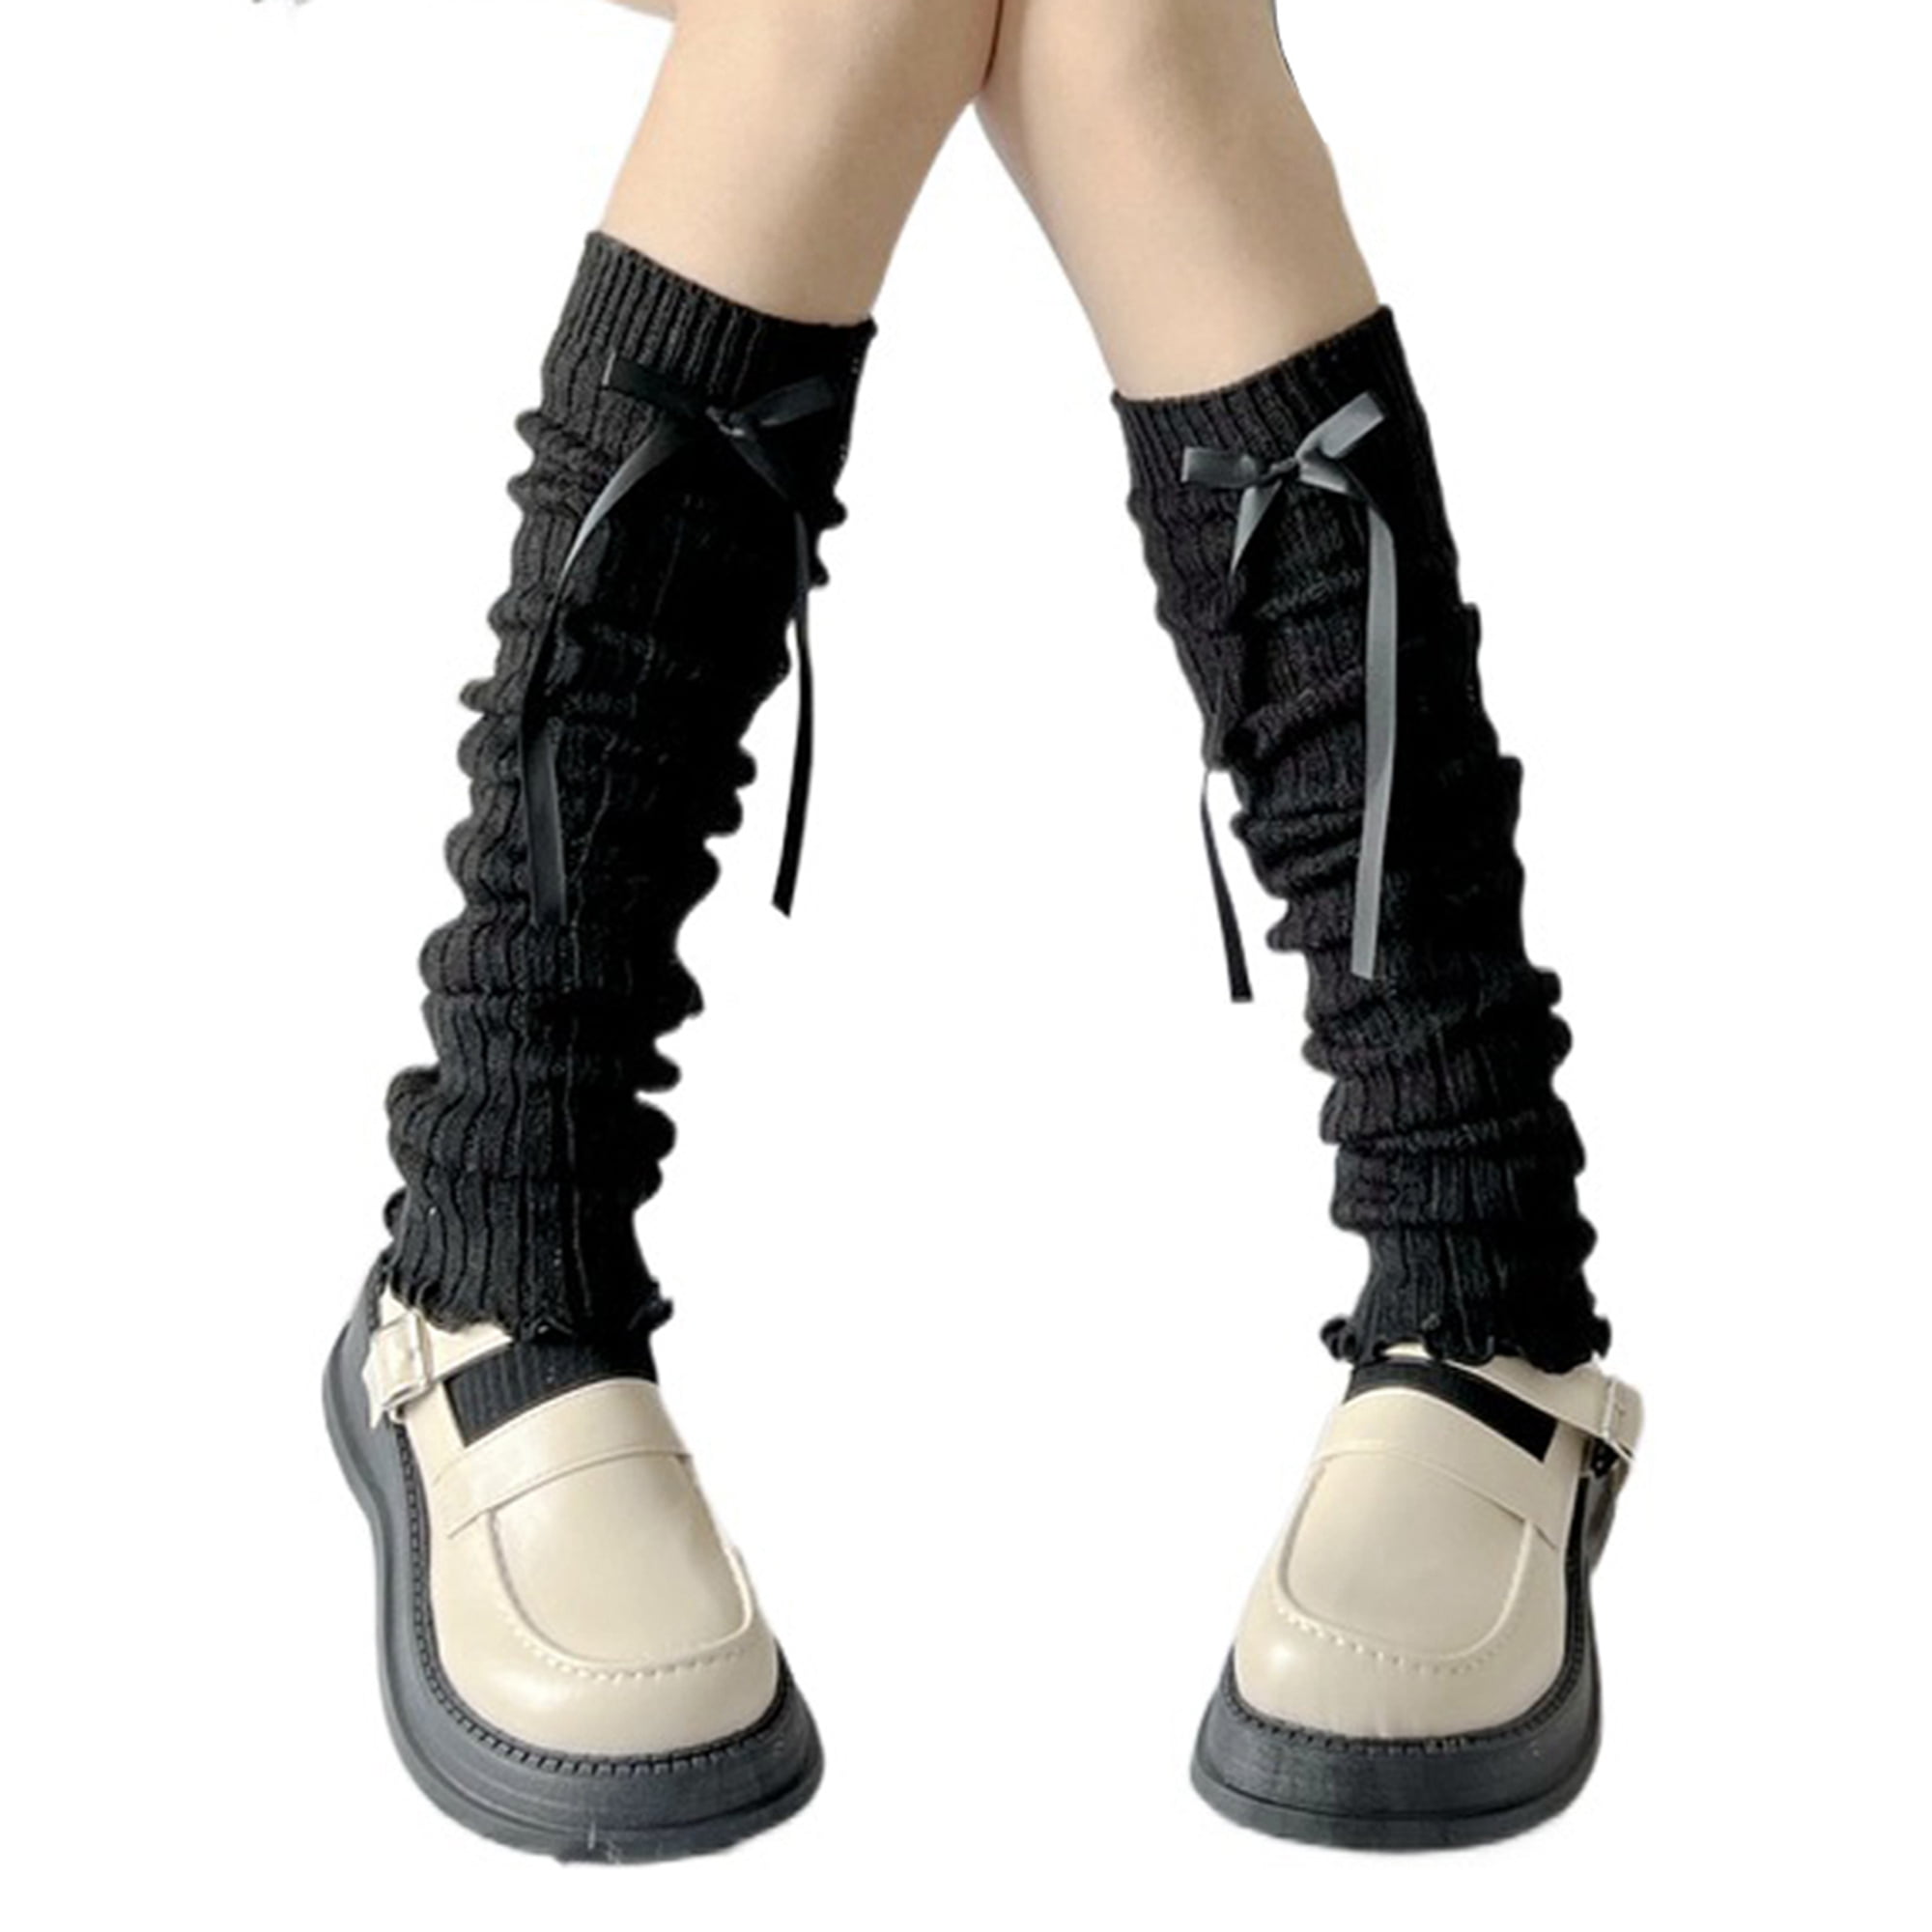 Biplut 1 Pair Autumn Winter Women Leg Warmers Knitted Japan Style Zipper Up  Boot Socks for Daily Wear 